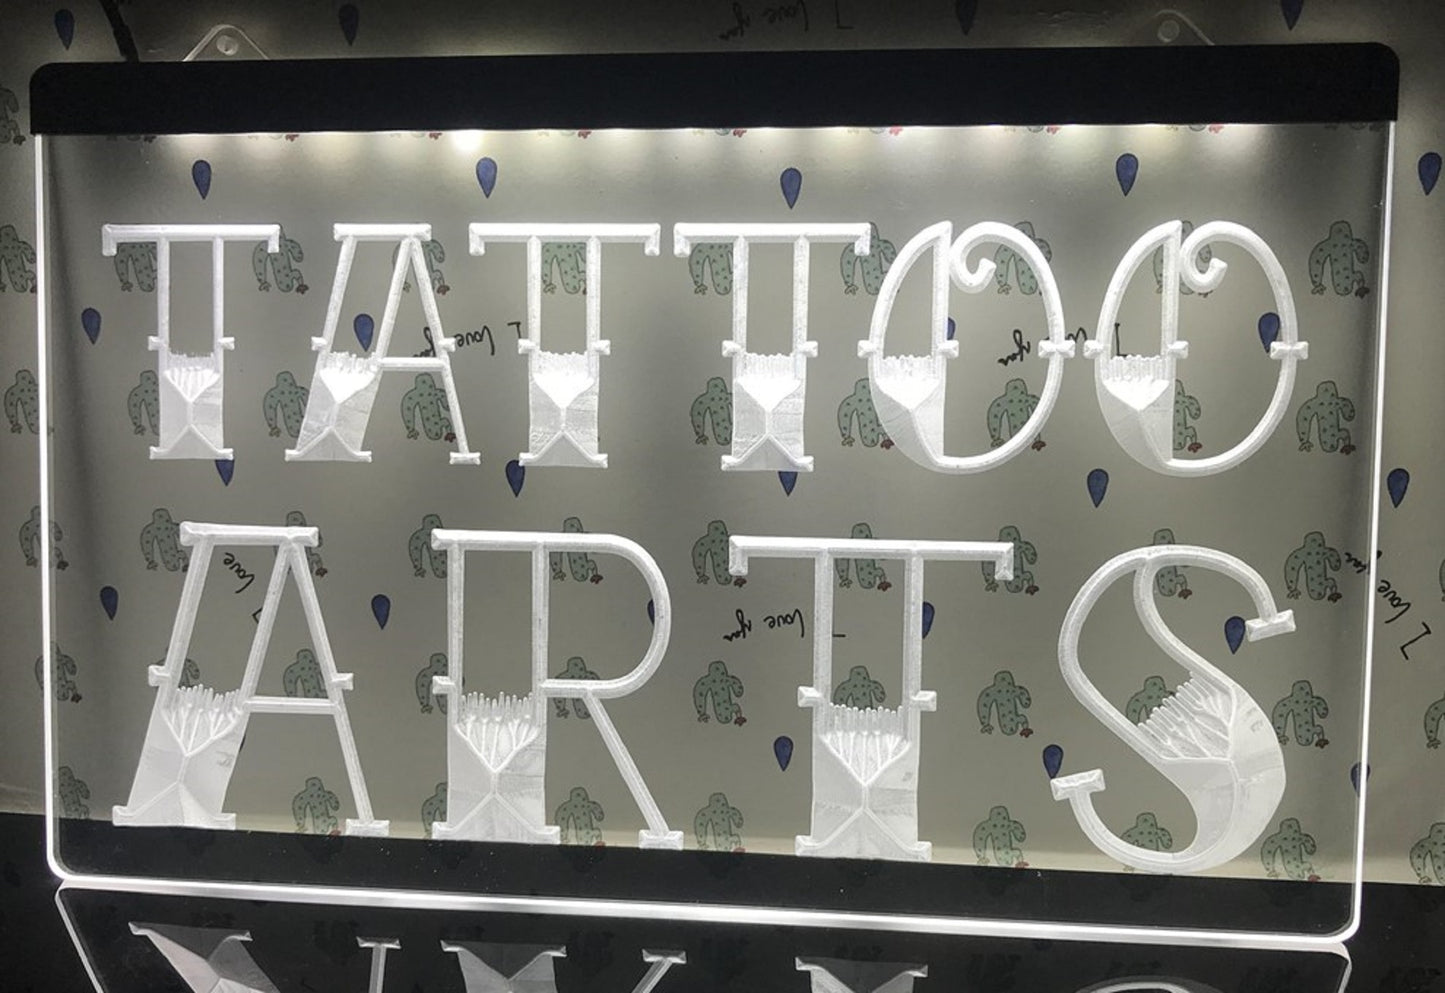 Neon Sign Tattoo Arts Tattoo Shop Wall Desktop Decor Free Shipping